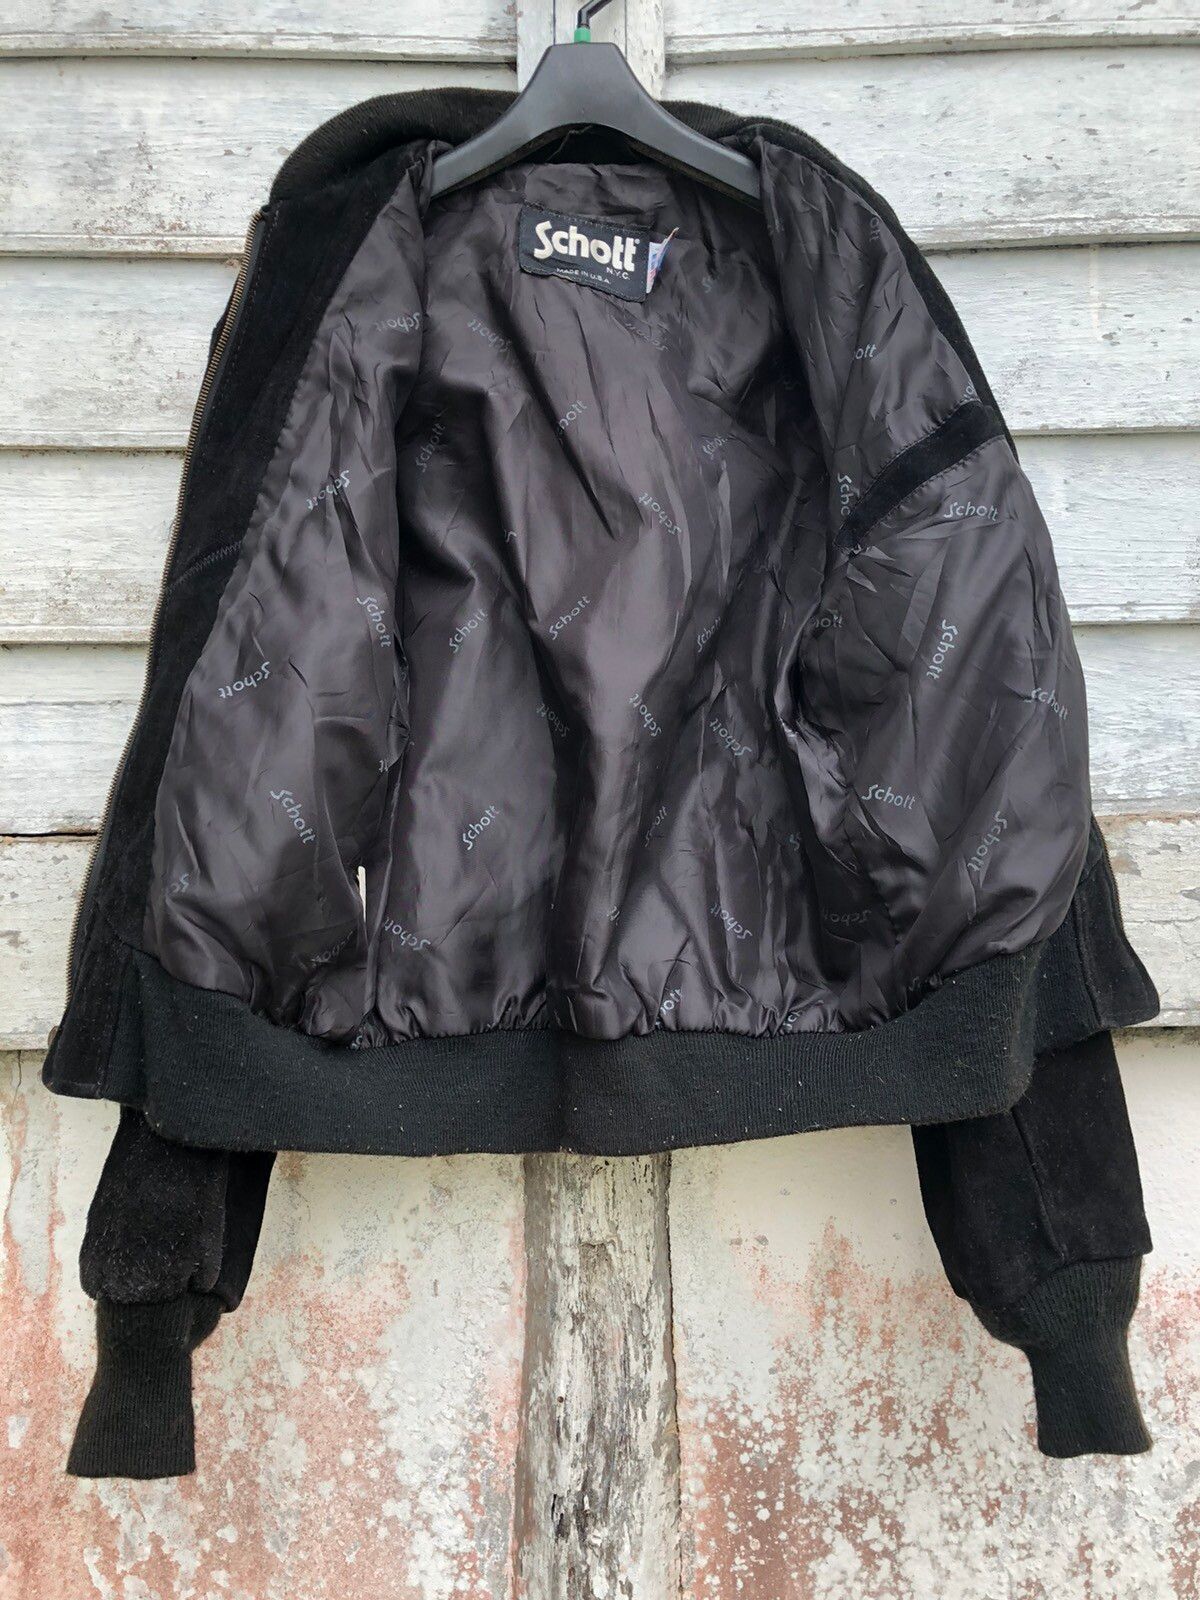 Vintage Schott Black Suede Leather Jacket - 5